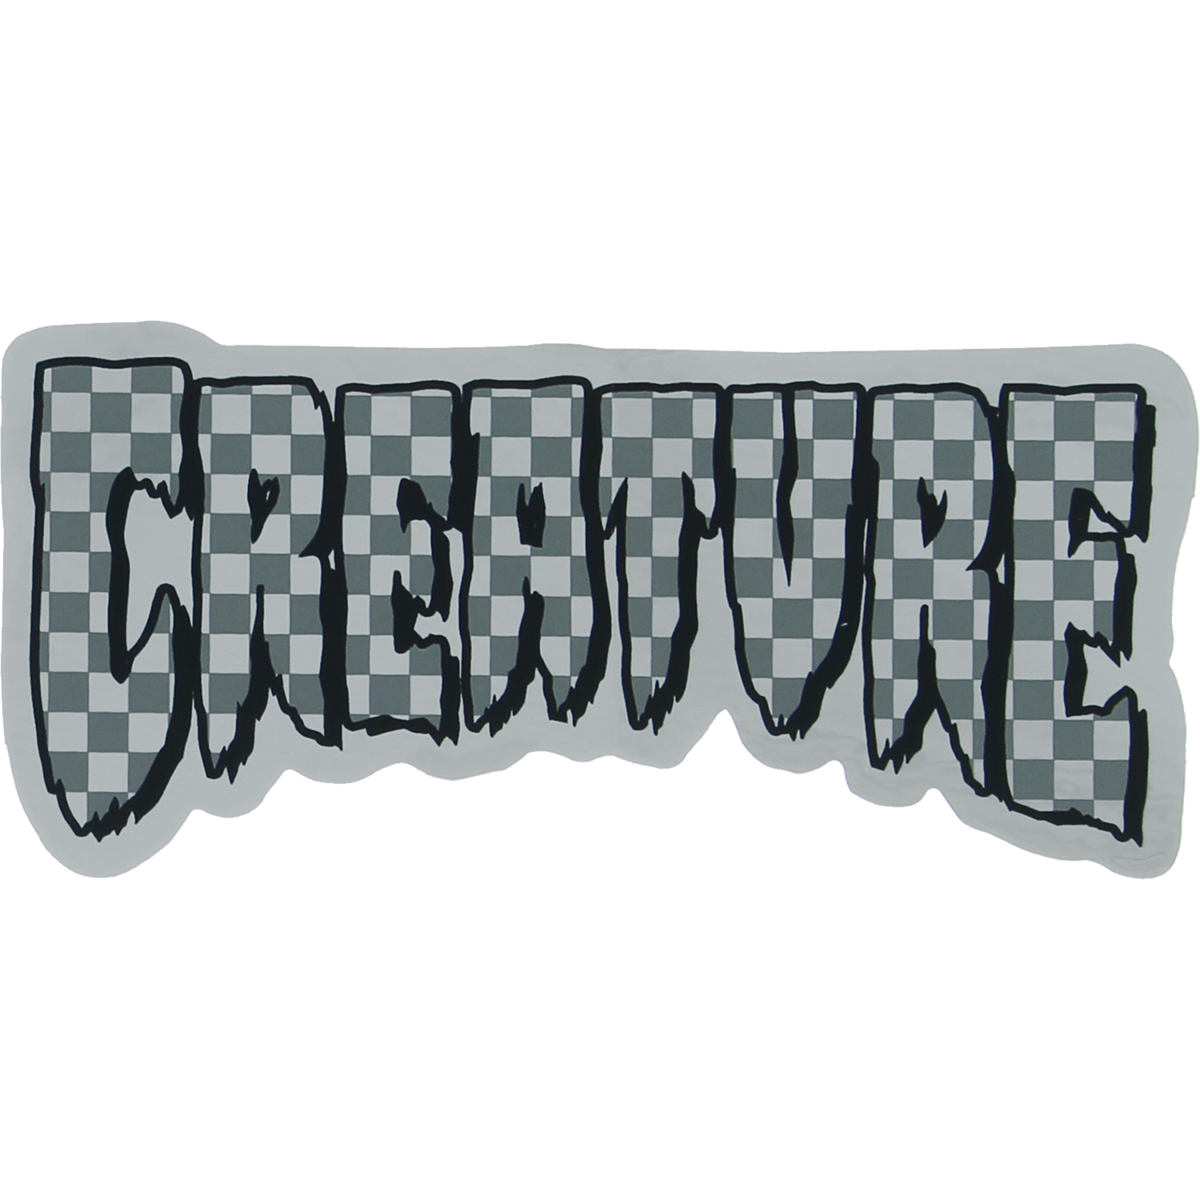 Creature Logo Check Foil Decal 2x4.25.